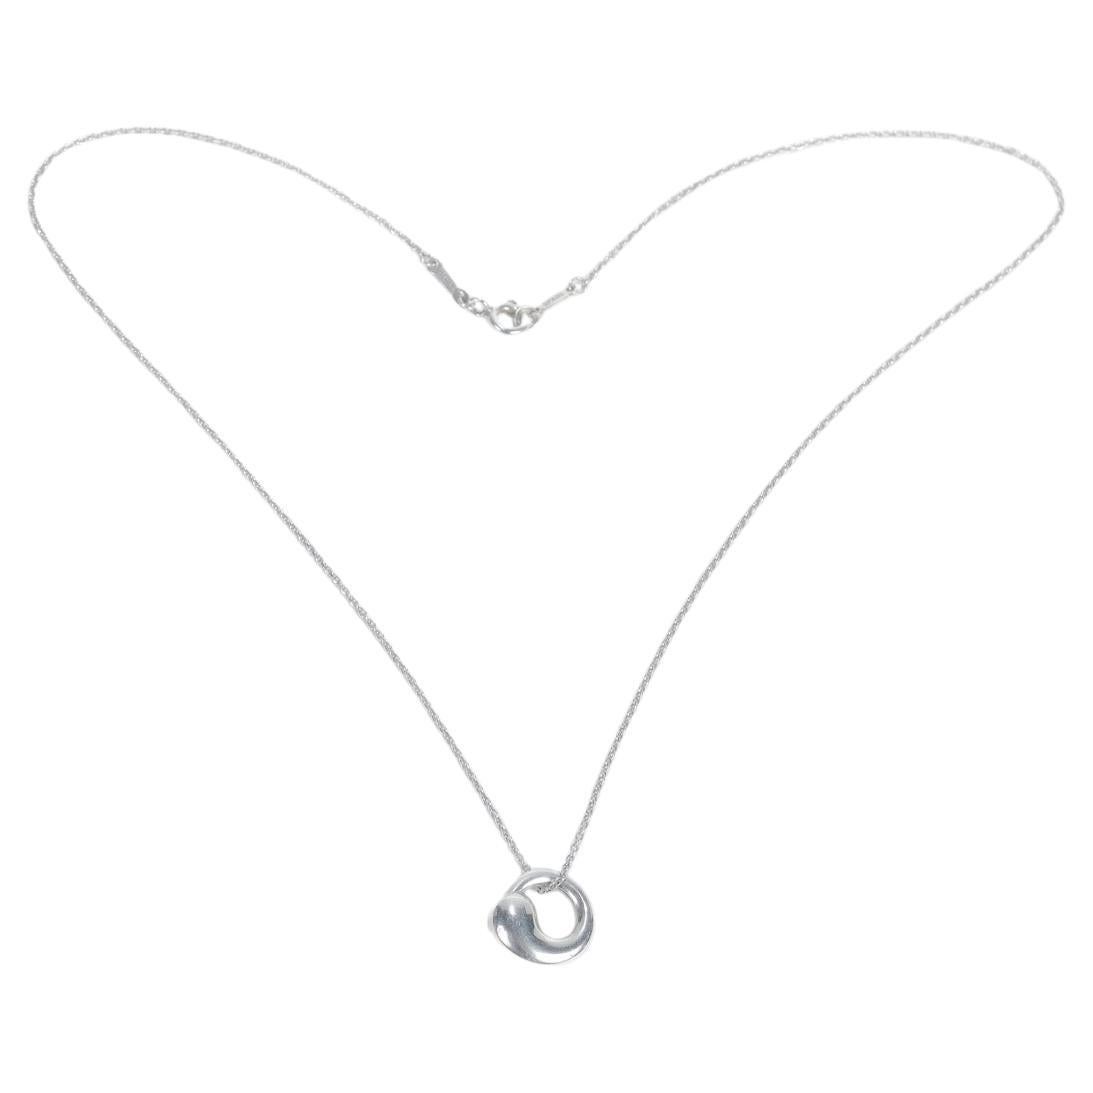 Sterlingsilber Elsa Peretti für Tiffany & Co. Ewiger Kreis Anhänger Halskette